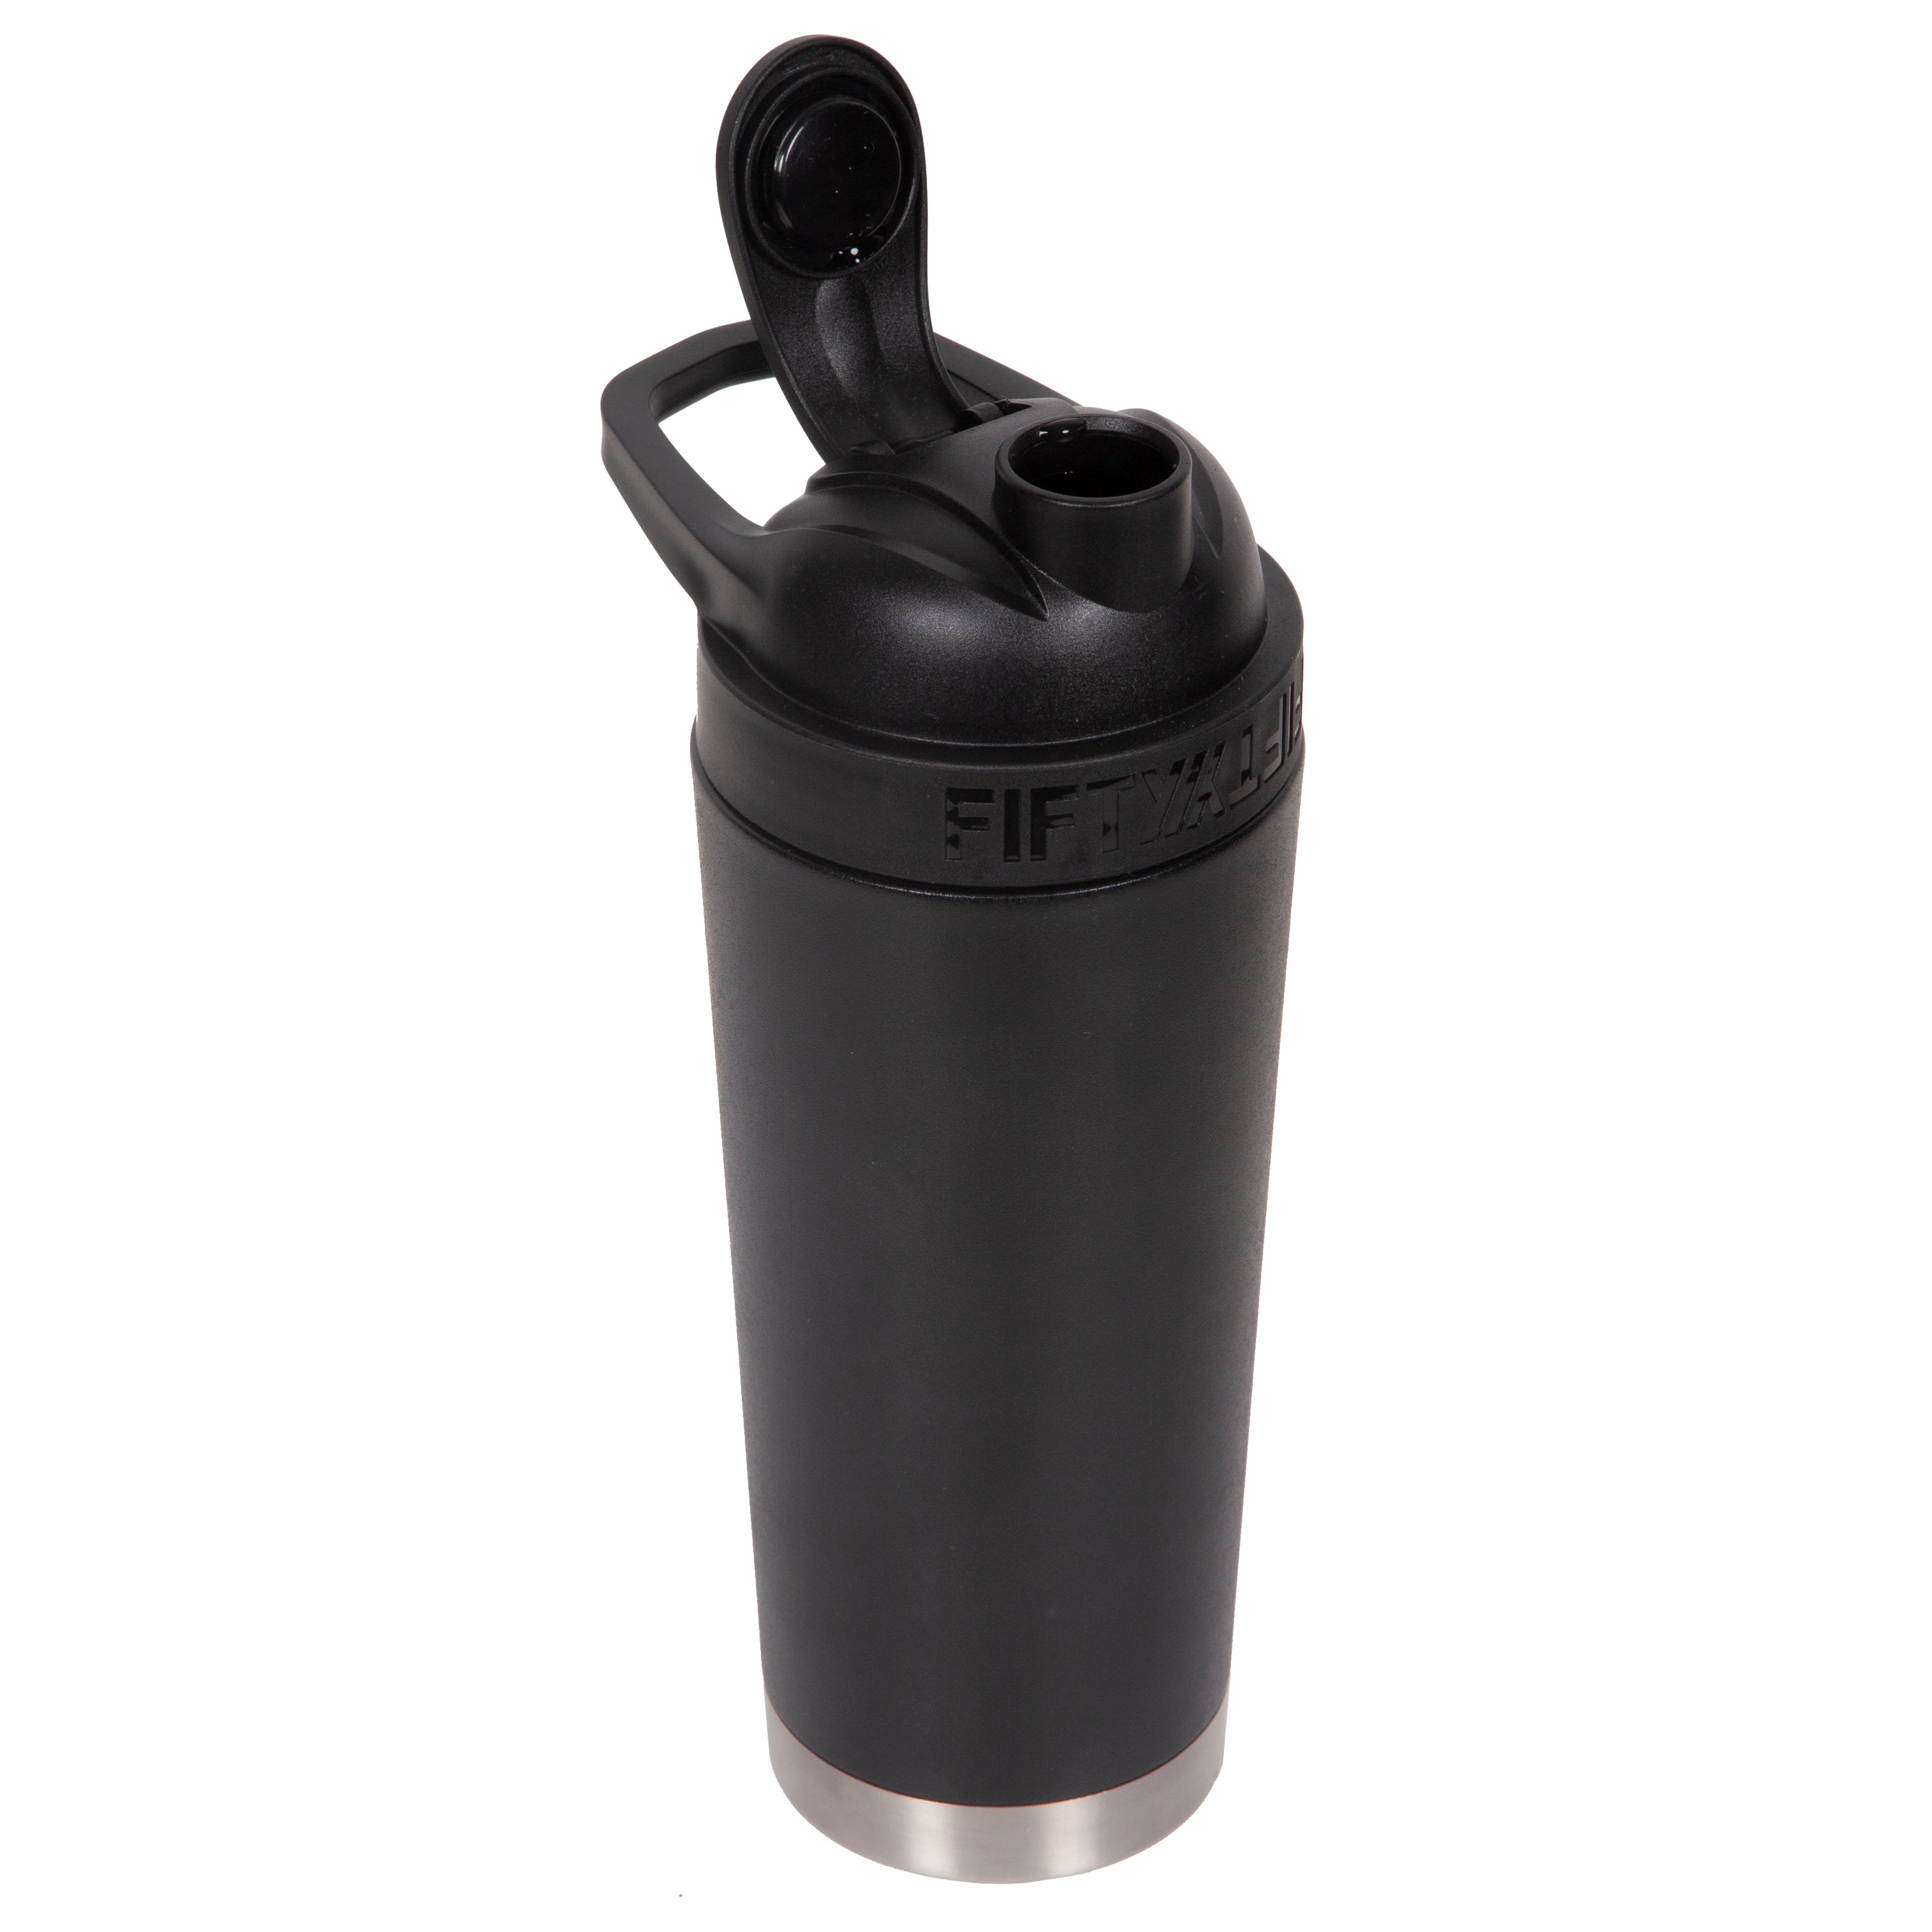 739Ml/25Oz Cup Shaker Bottle 304 Stainless Steel Metal Shake